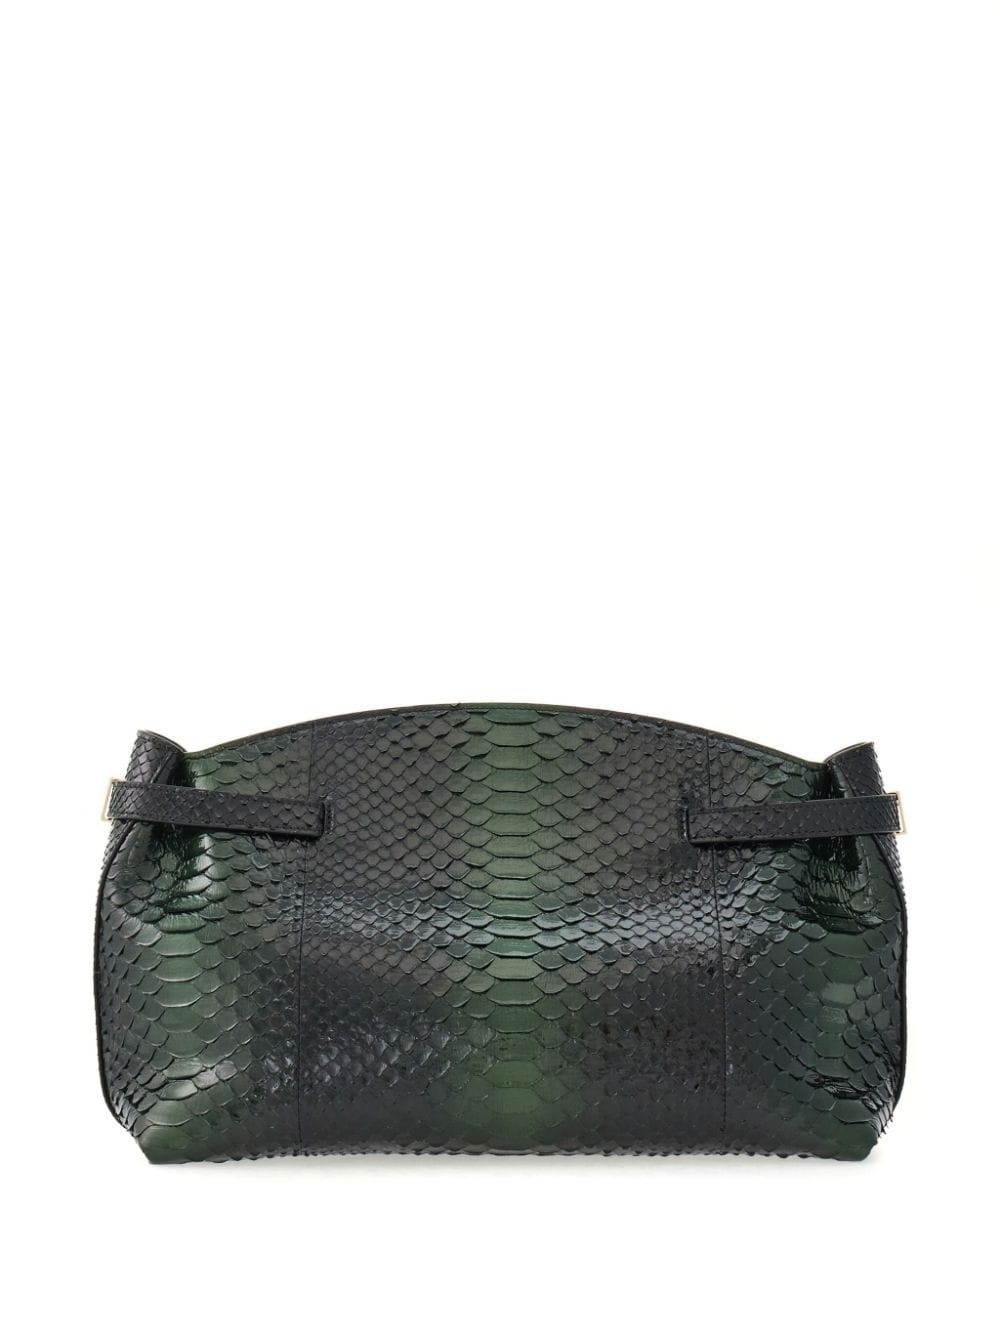 snakeskin-effect leather clutch bag - 4